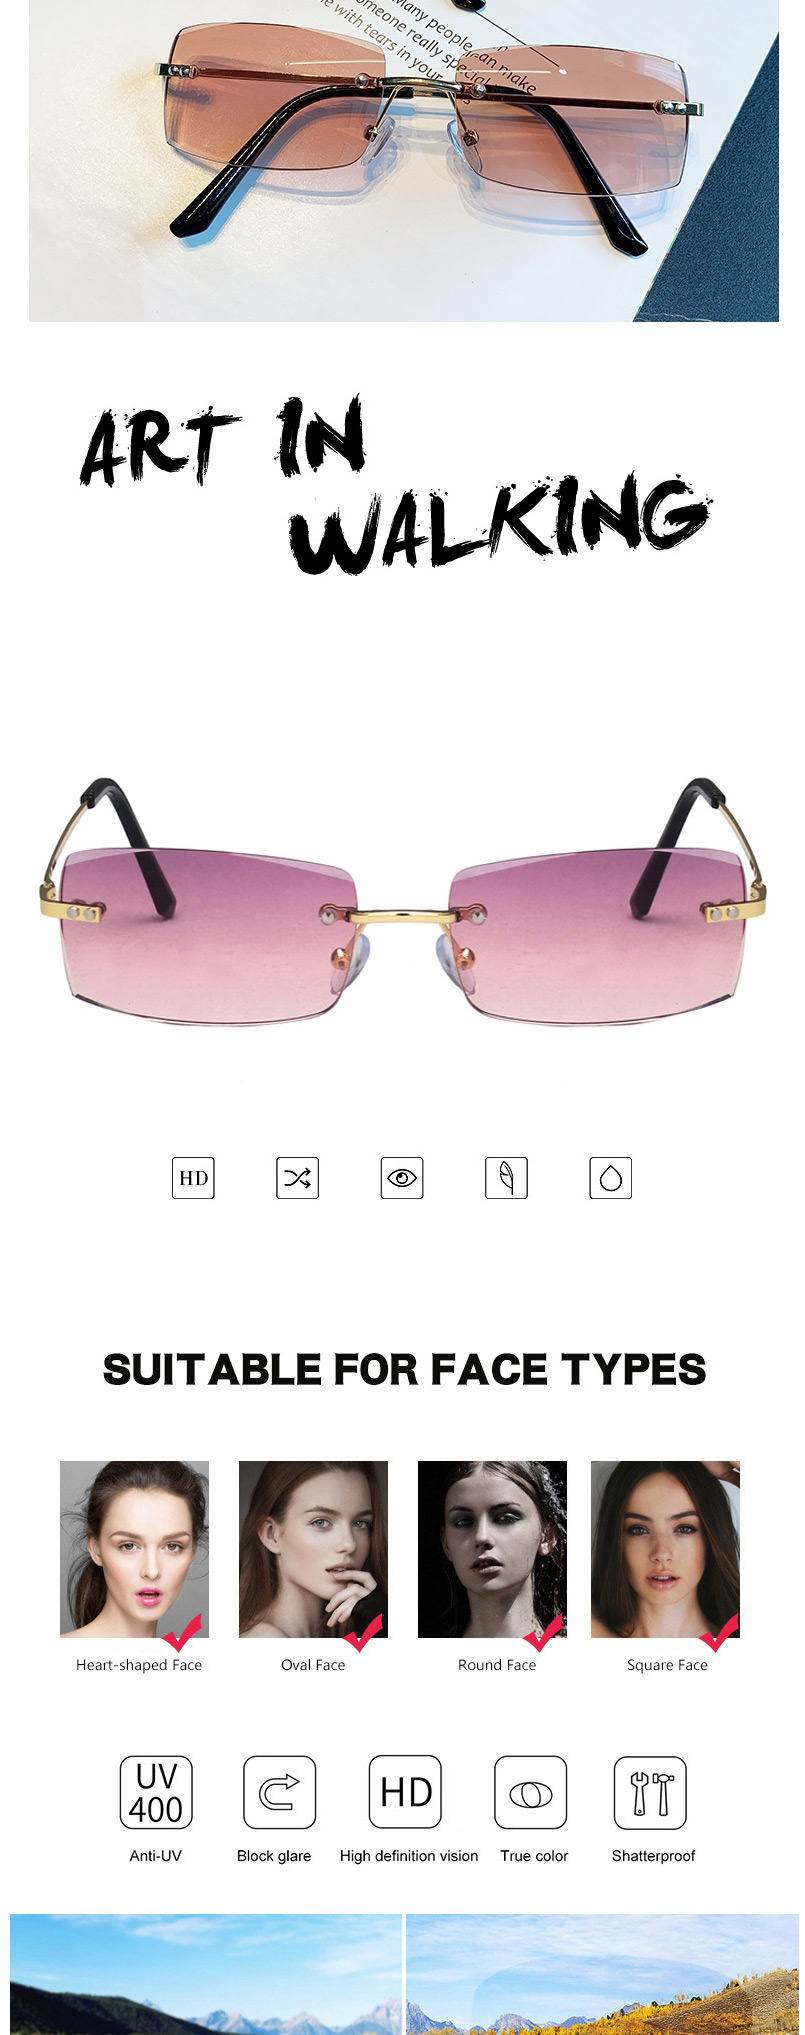 Fashion Purple Powder Trimmed Rimless Small Frame Sunglasses,Women Sunglasses